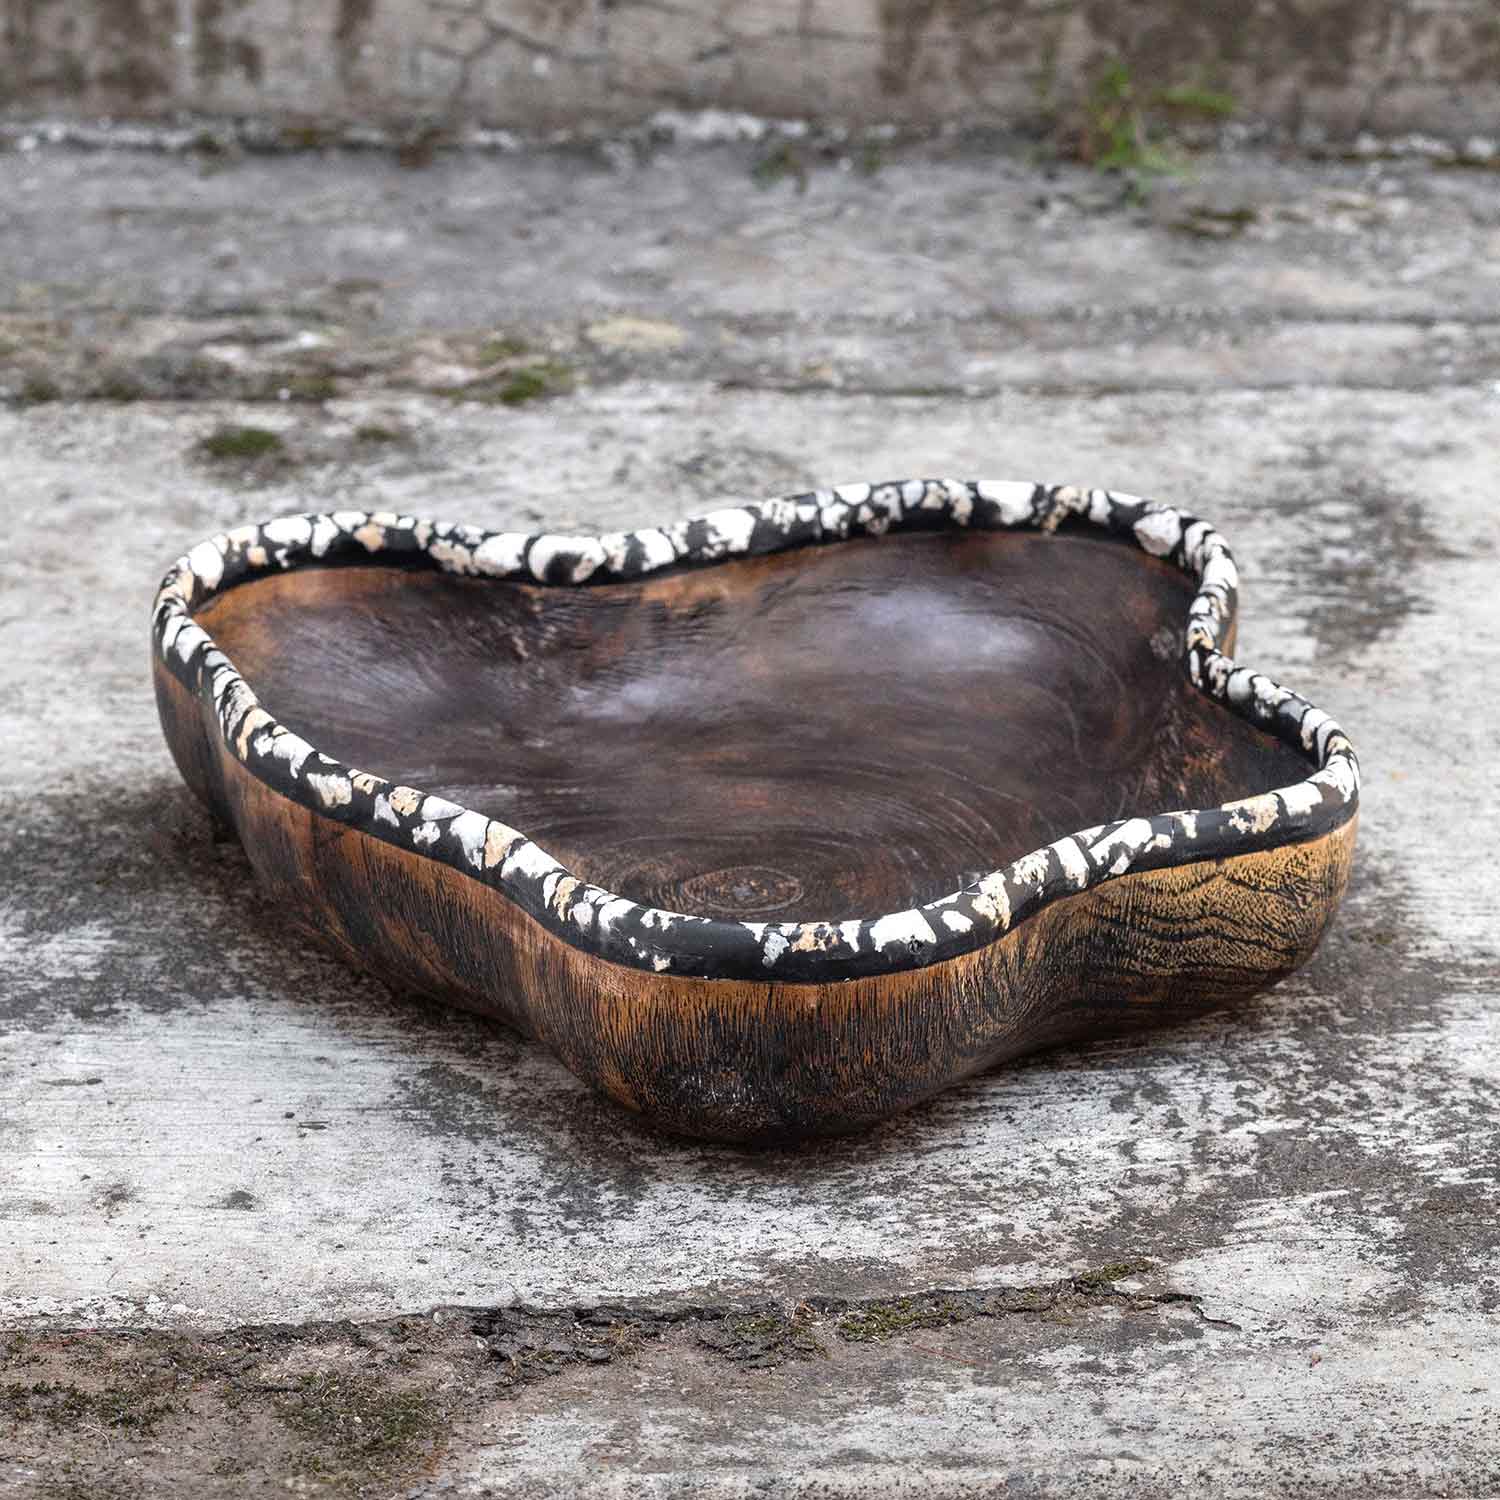 Uttermost Chikasha Wooden Bowl - Large